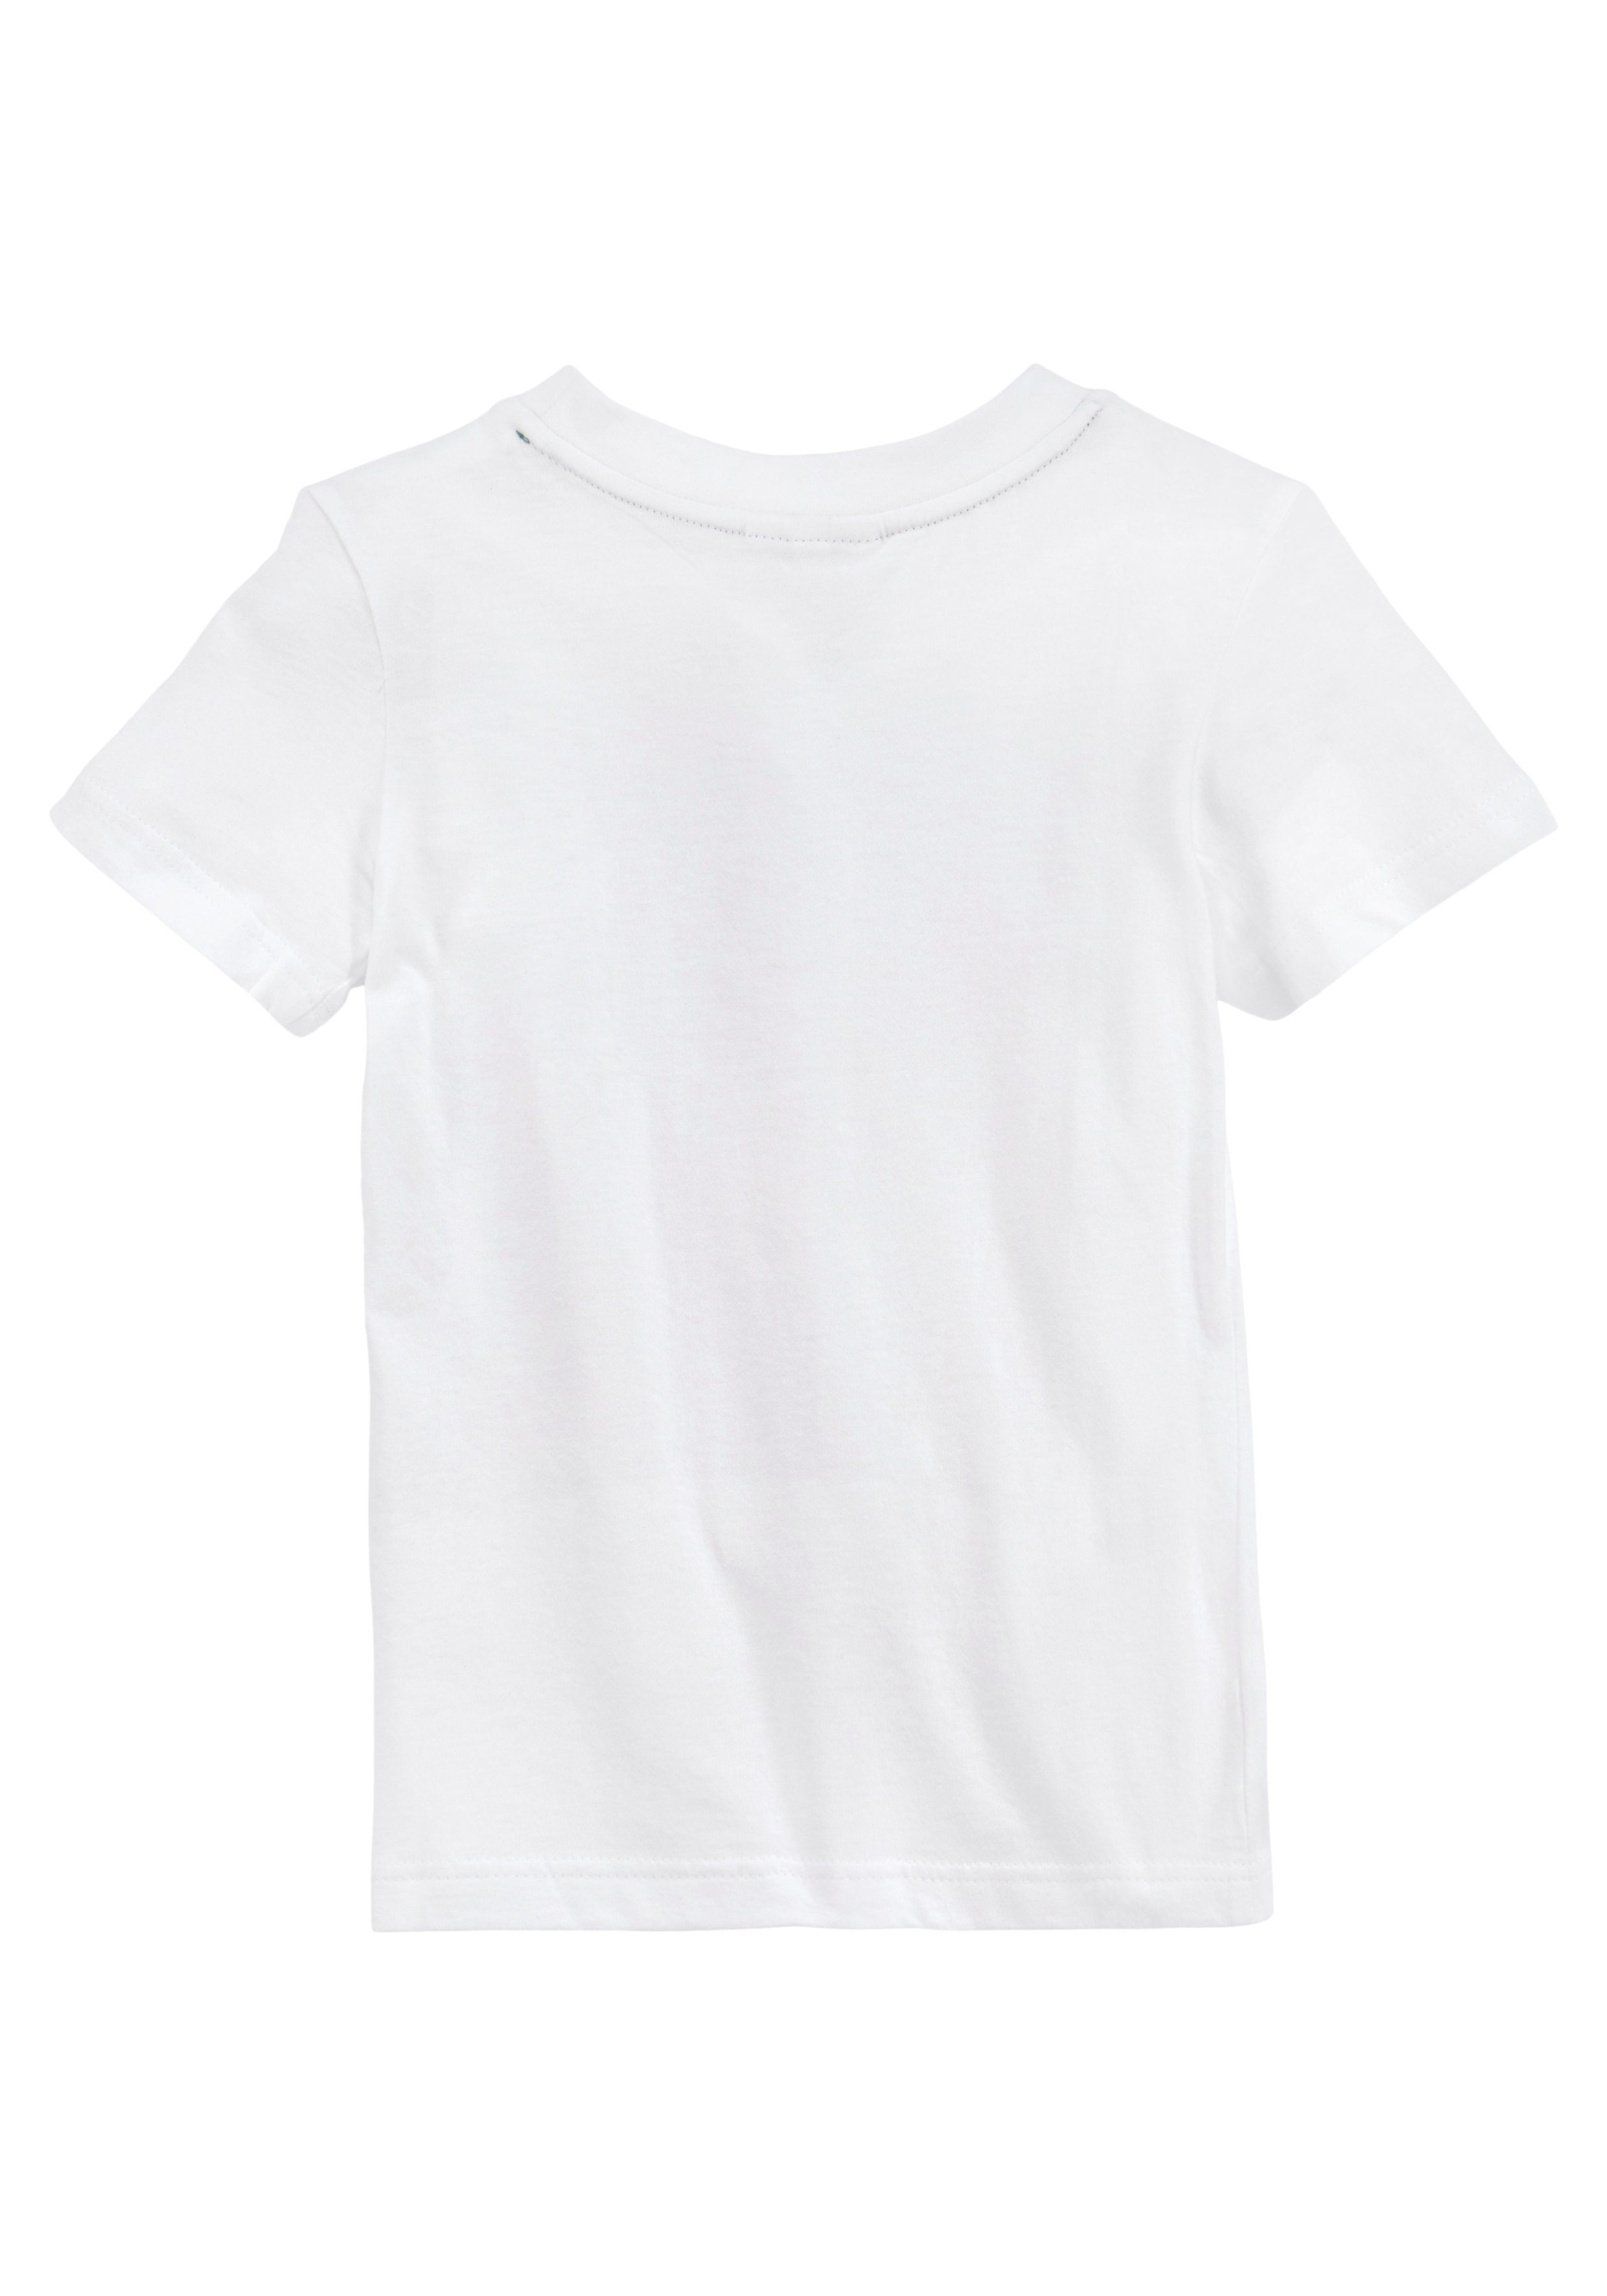 Lacoste-Krokodil T-Shirt Brusthöhe mit WHITE Lacoste auf